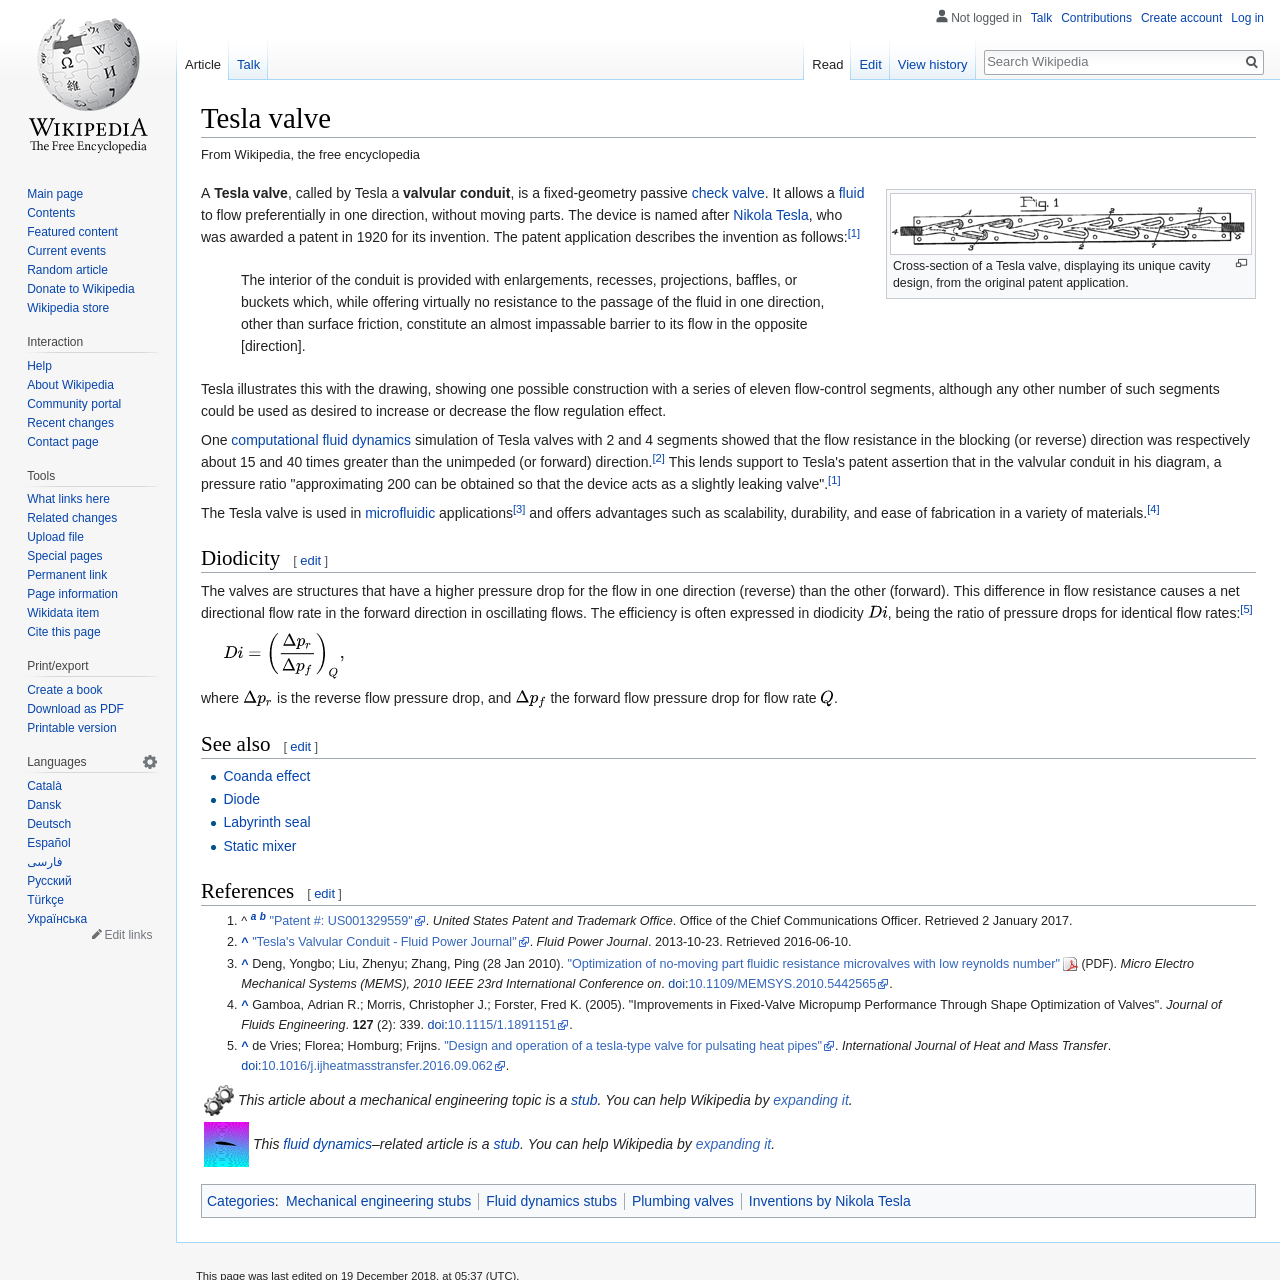 Mechanical systems drawing - Wikipedia